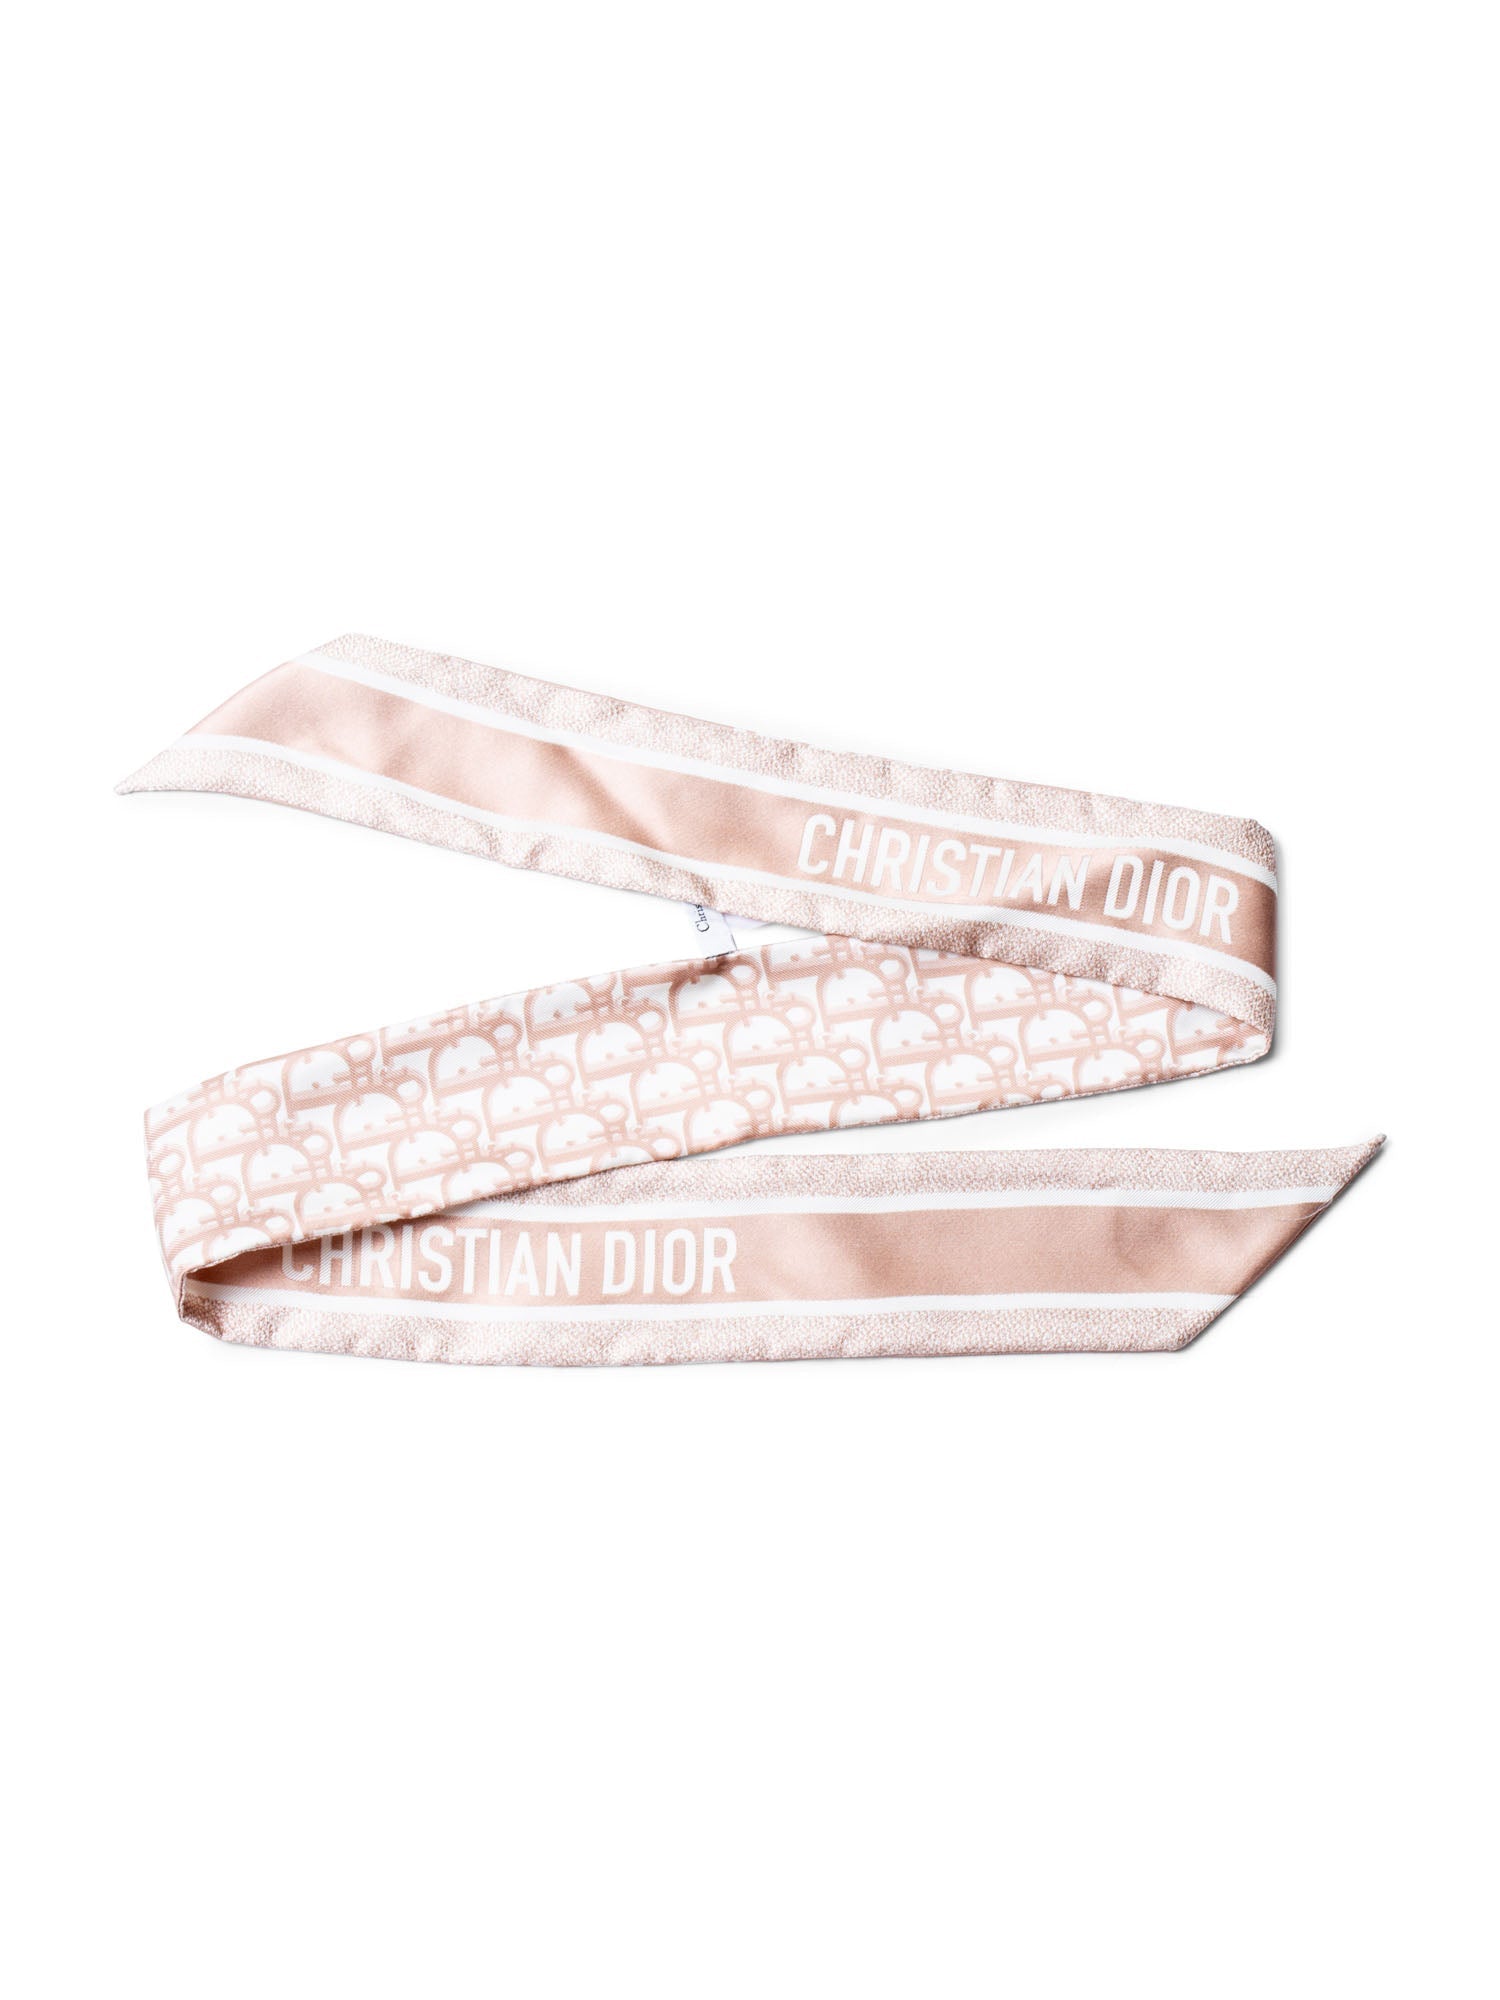 ᵛᴬᴿᵀᴬᴾ✨  Louis vuitton bag, Lady dior, Lv scarf